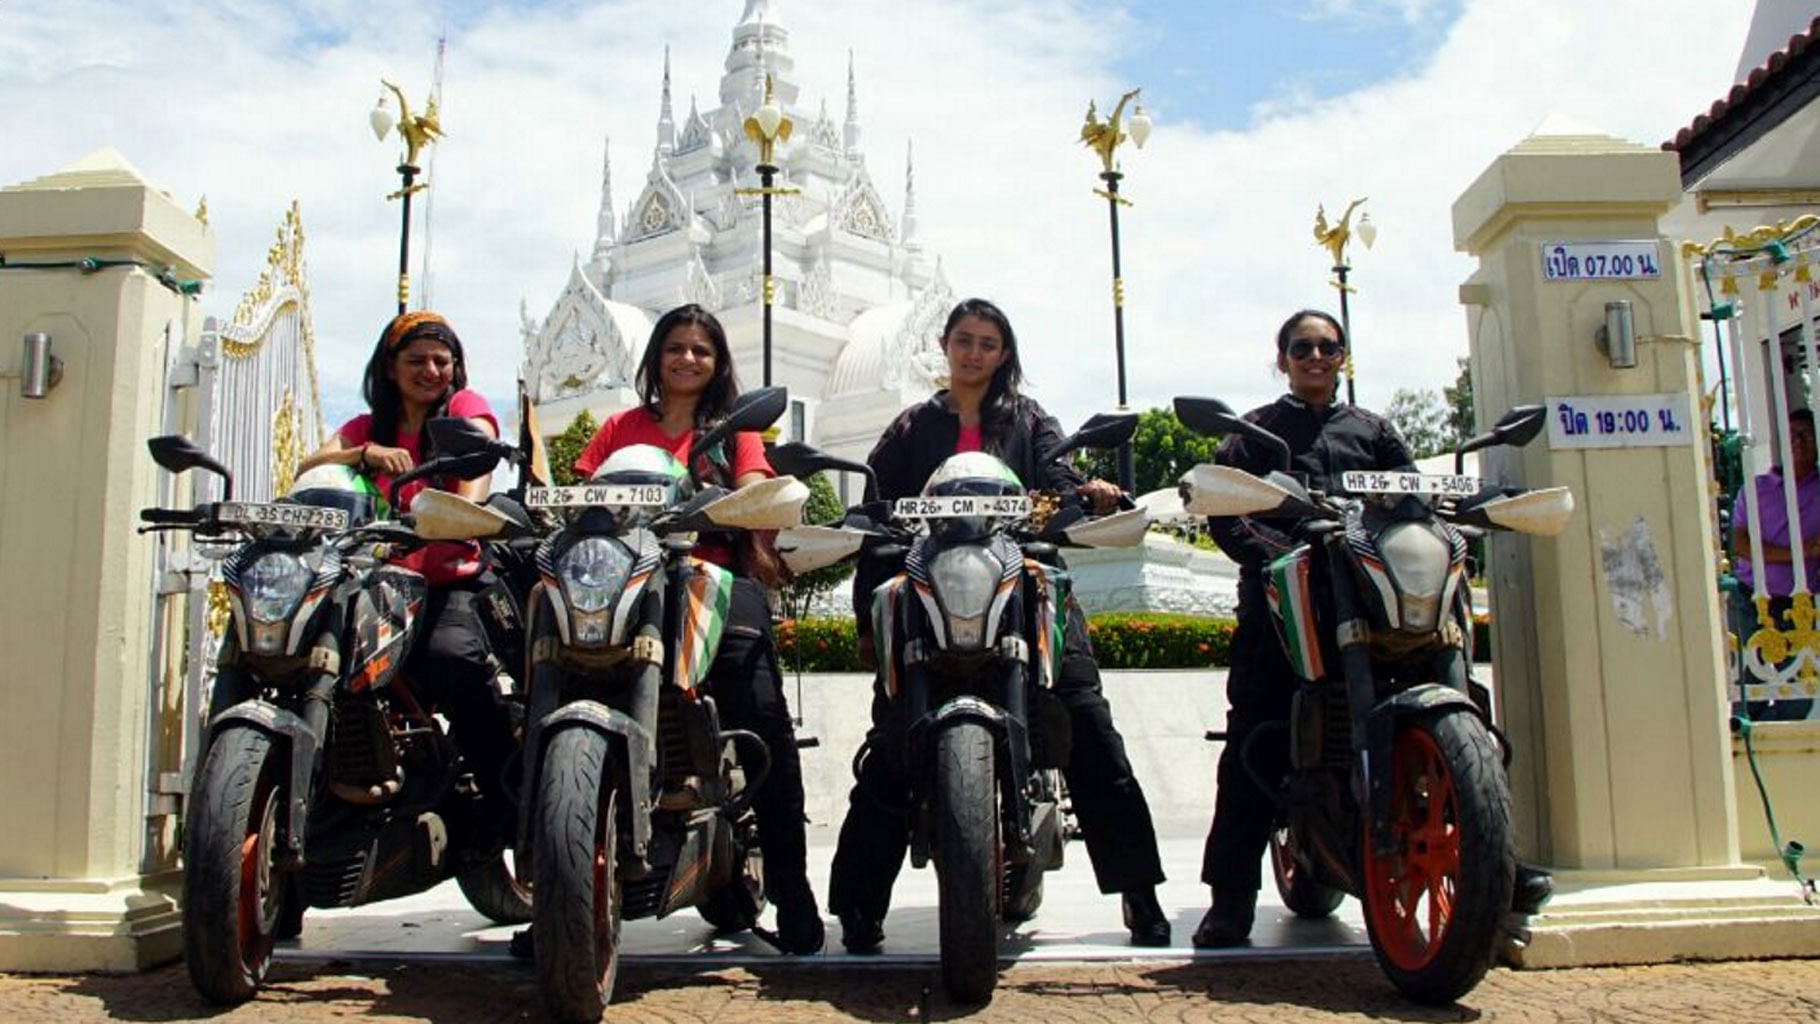 The Biking Queens in the the Surat Thani City Pillar Shrines in Thailand. (Photo Courtesy: Facebook/<a href="https://www.facebook.com/BikingQueensSurat/photos/a.887965764611993.1073741829.886942381380998/1097402743668293/?type=3&amp;theater">Biking Queens</a>)